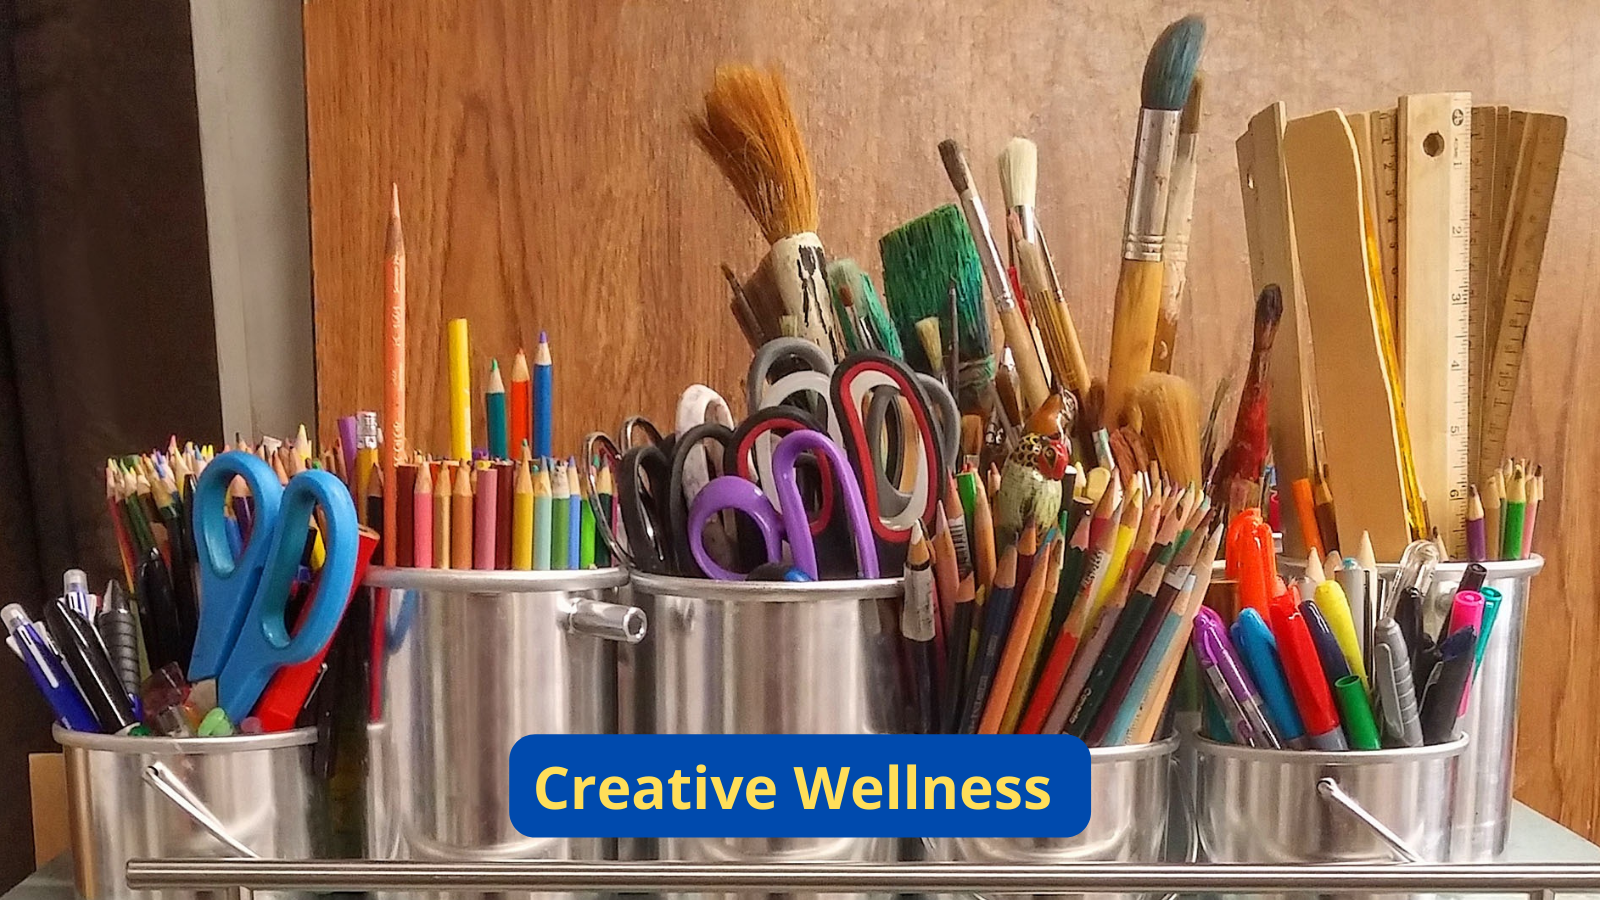 Creative Wellness - Weekly Art Session